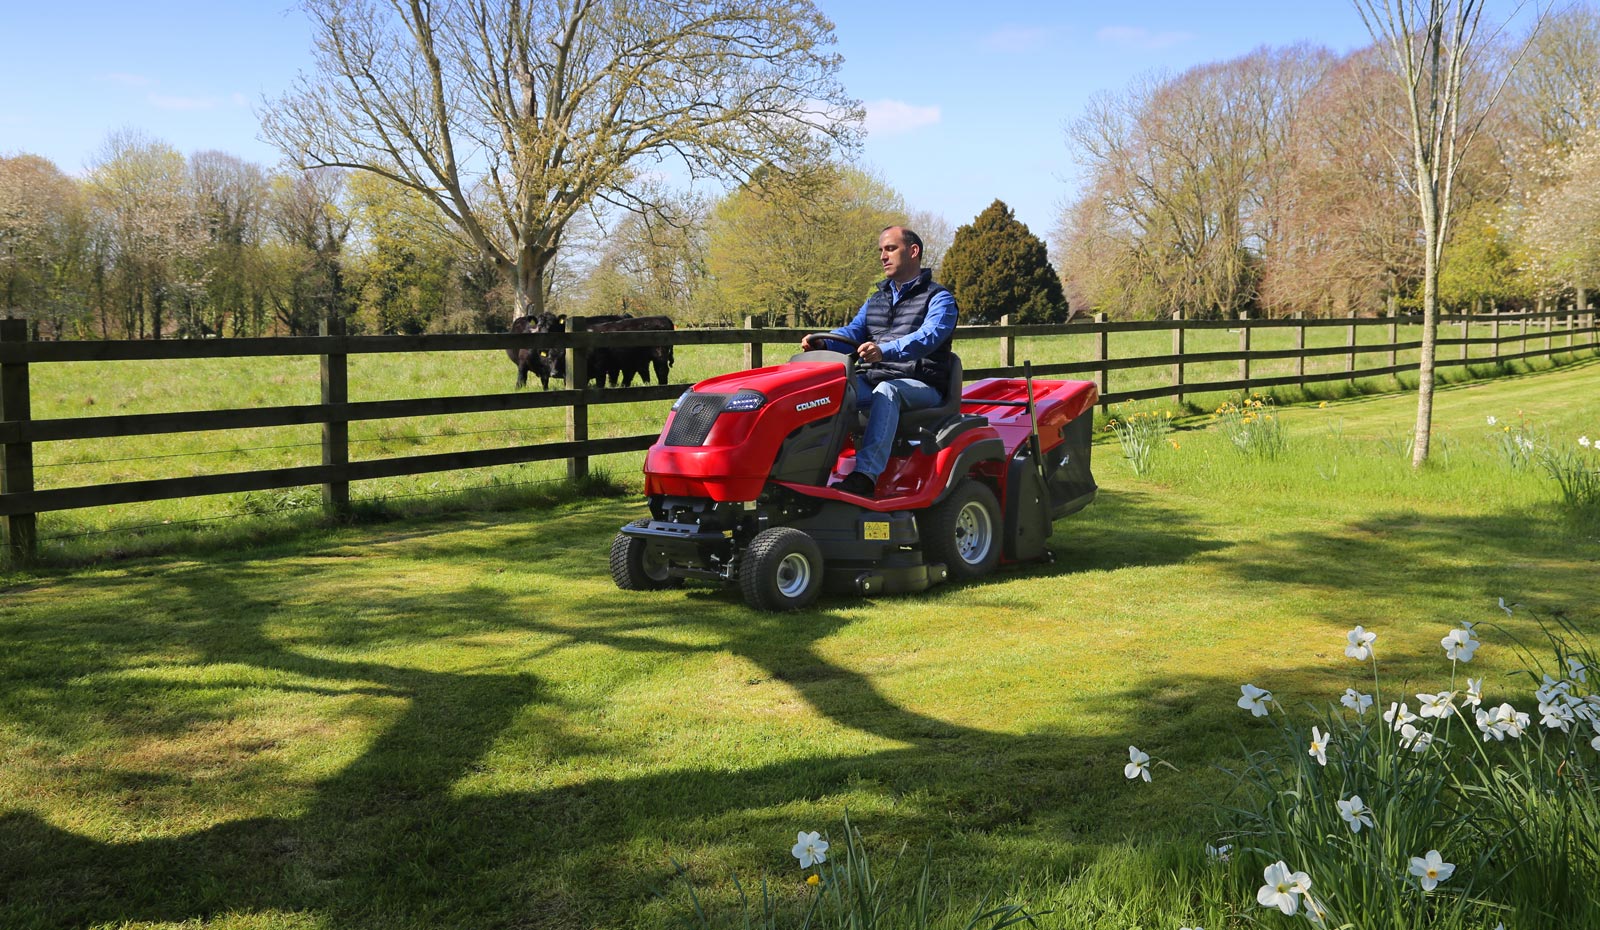 countax-garden-tractor-cseries-collecting-grass-spring